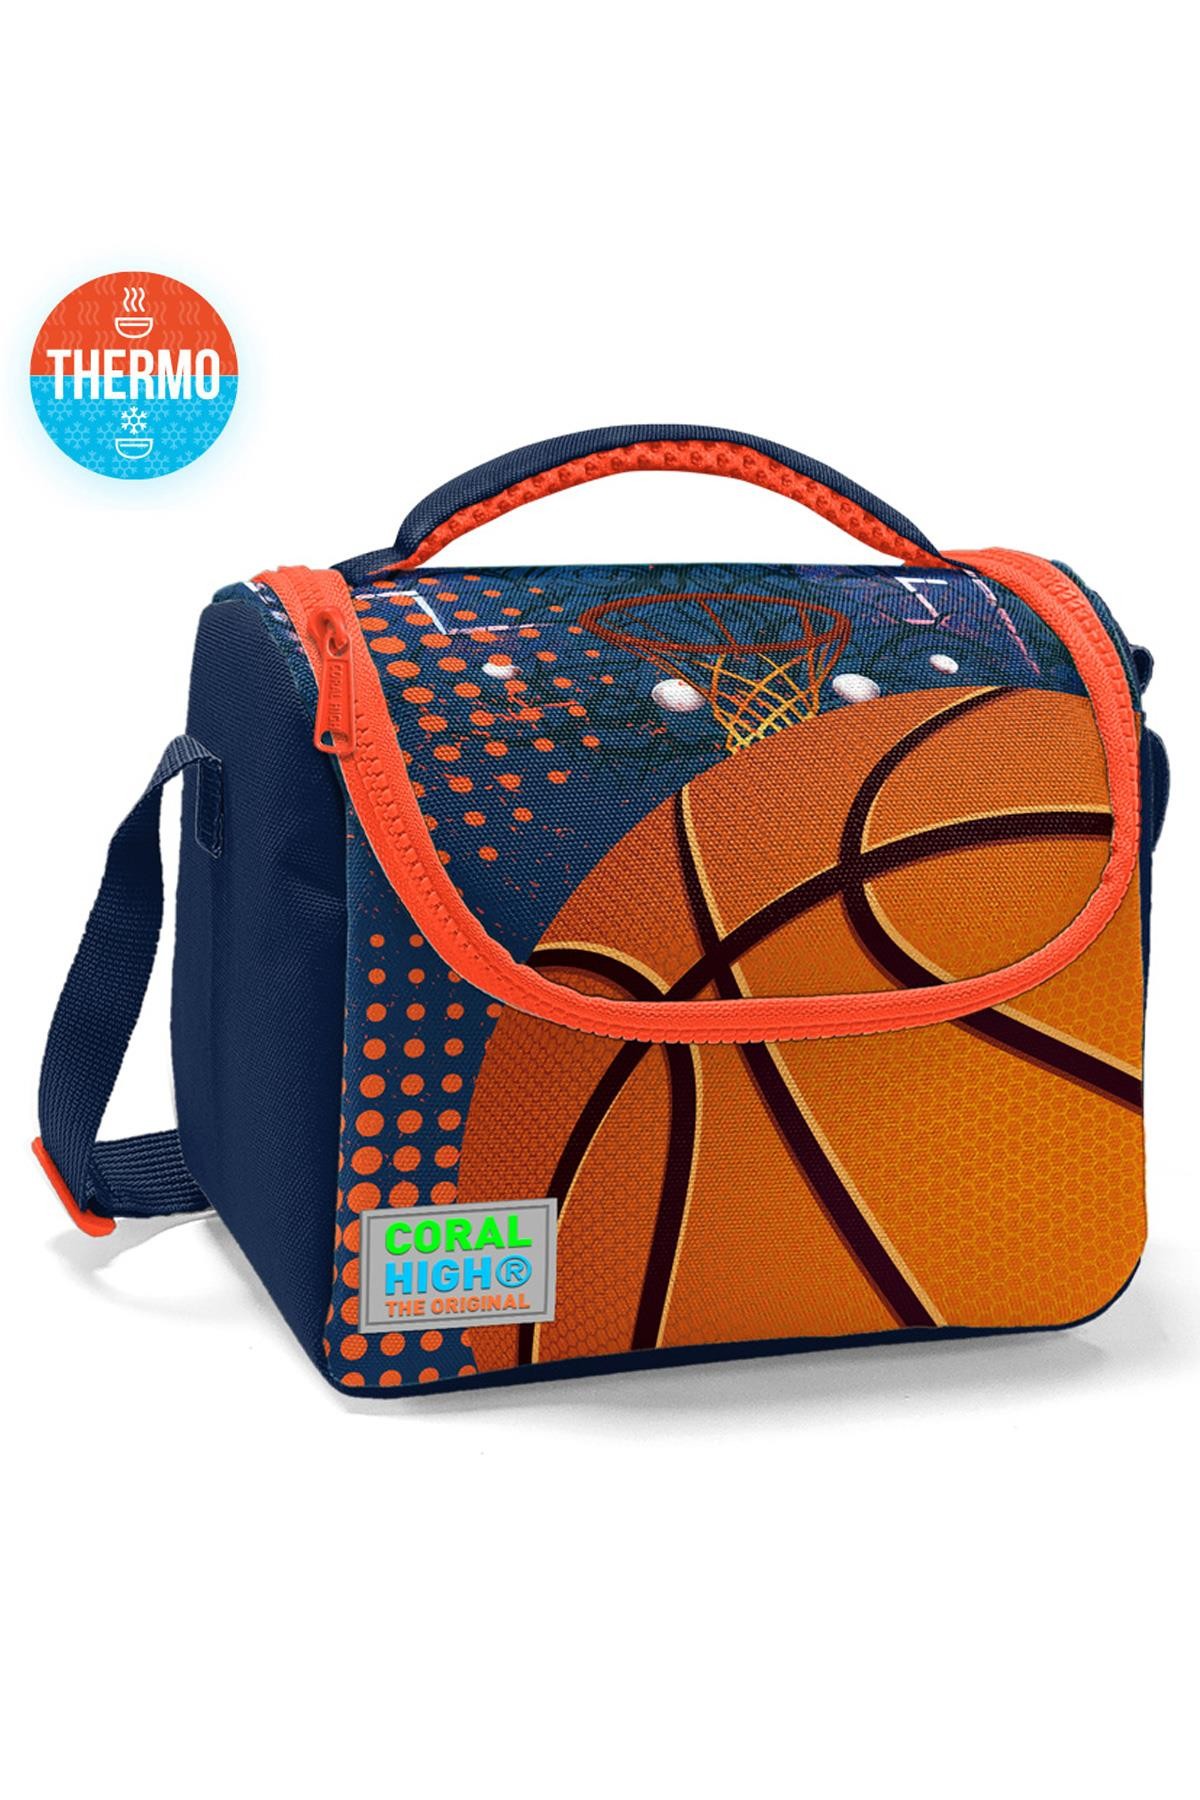 Coral High Kids  Turuncu Lacivert Basketbol Desenli Thermo Beslenme Çantası 11766